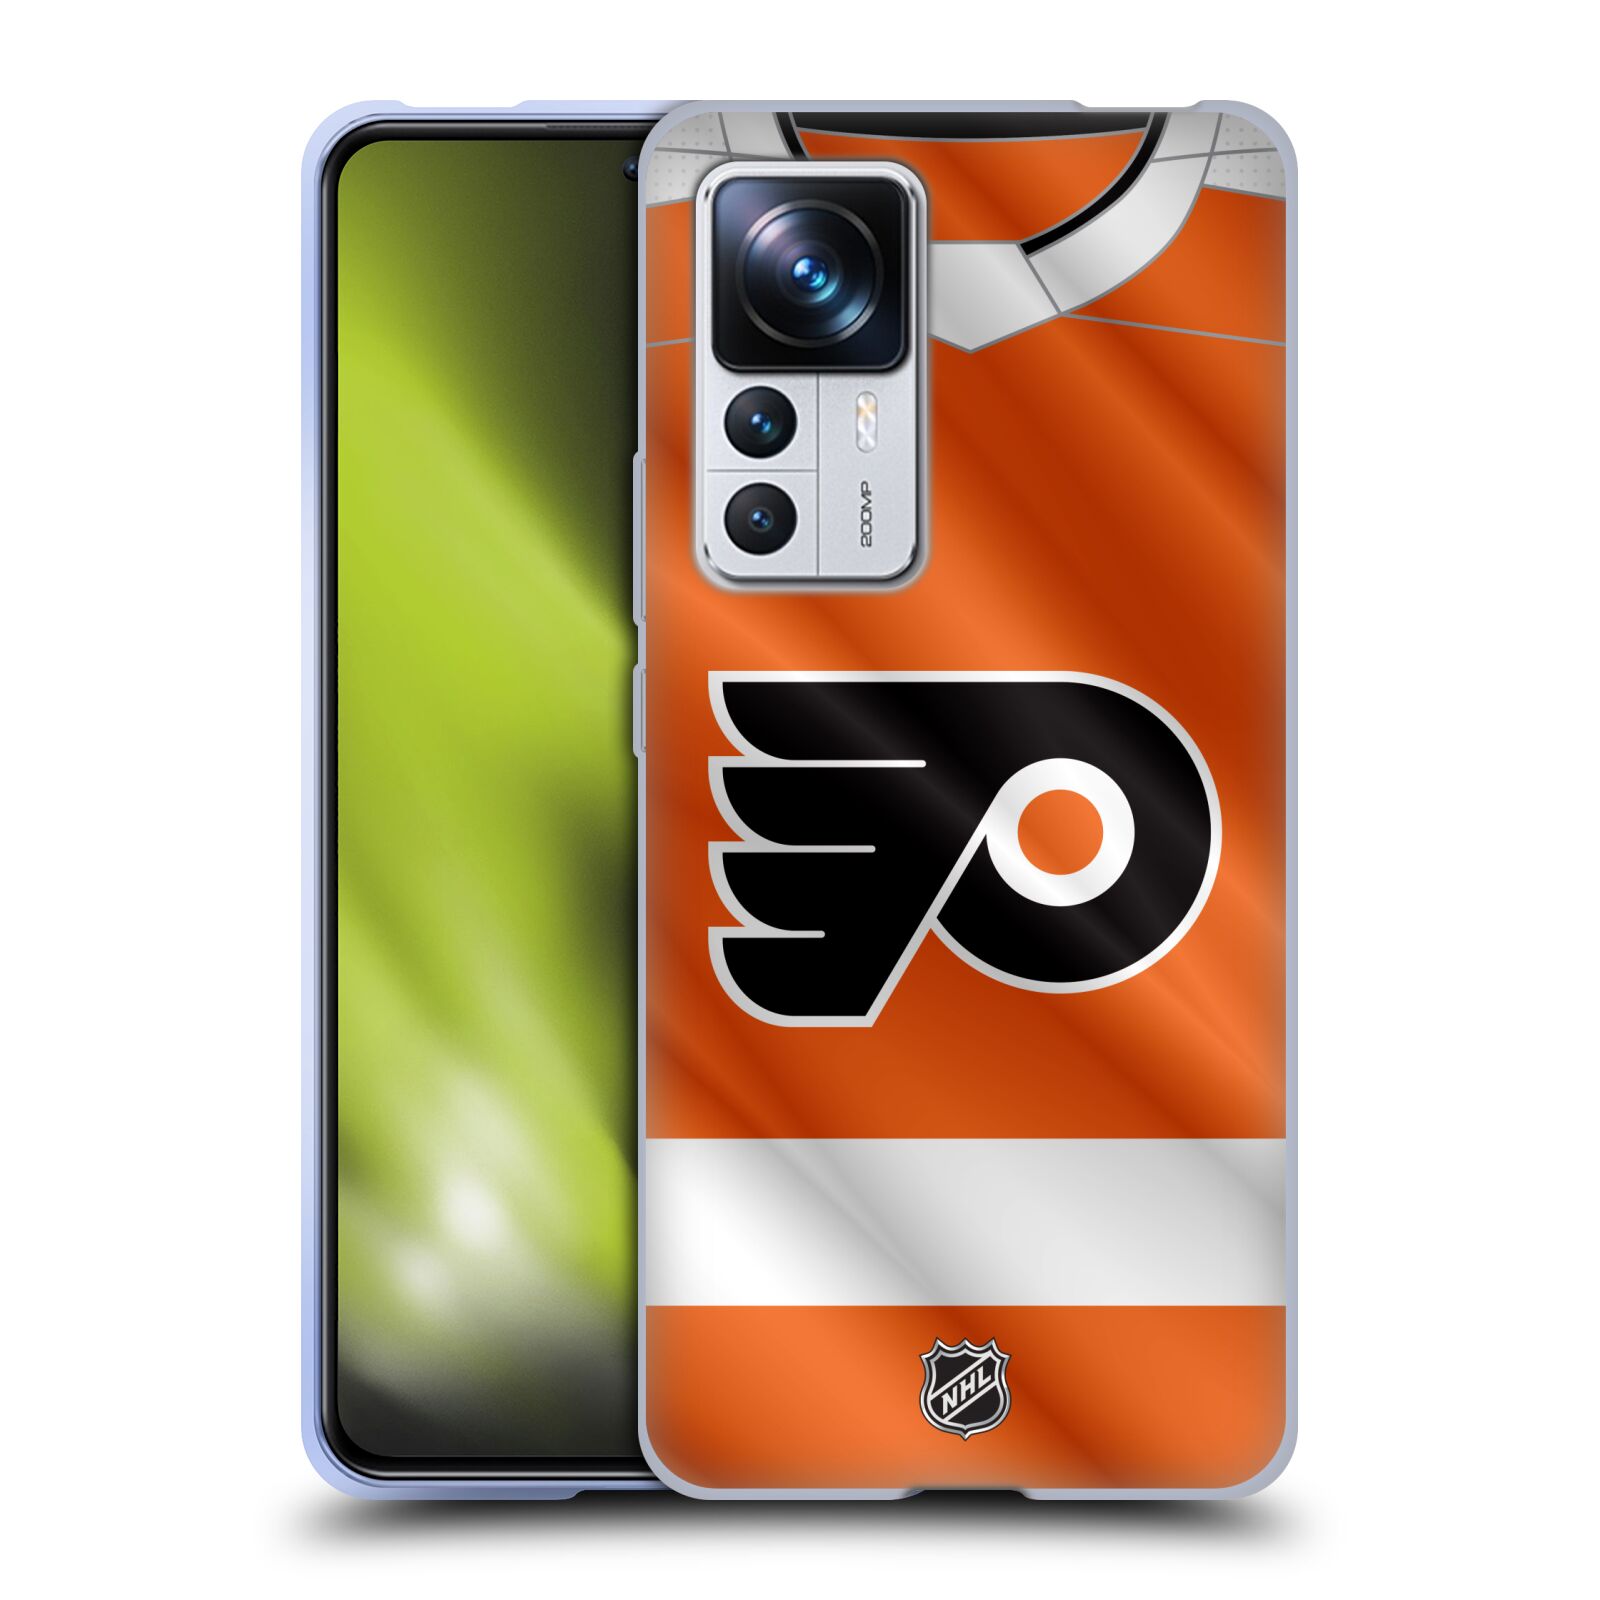 Silikonové pouzdro na mobil Xiaomi 12T / 12T Pro - NHL - Dres Philadelphia Flyers (Silikonový kryt, obal, pouzdro na mobilní telefon Xiaomi 12T / 12T Pro s licencovaným motivem NHL - Dres Philadelphia Flyers)